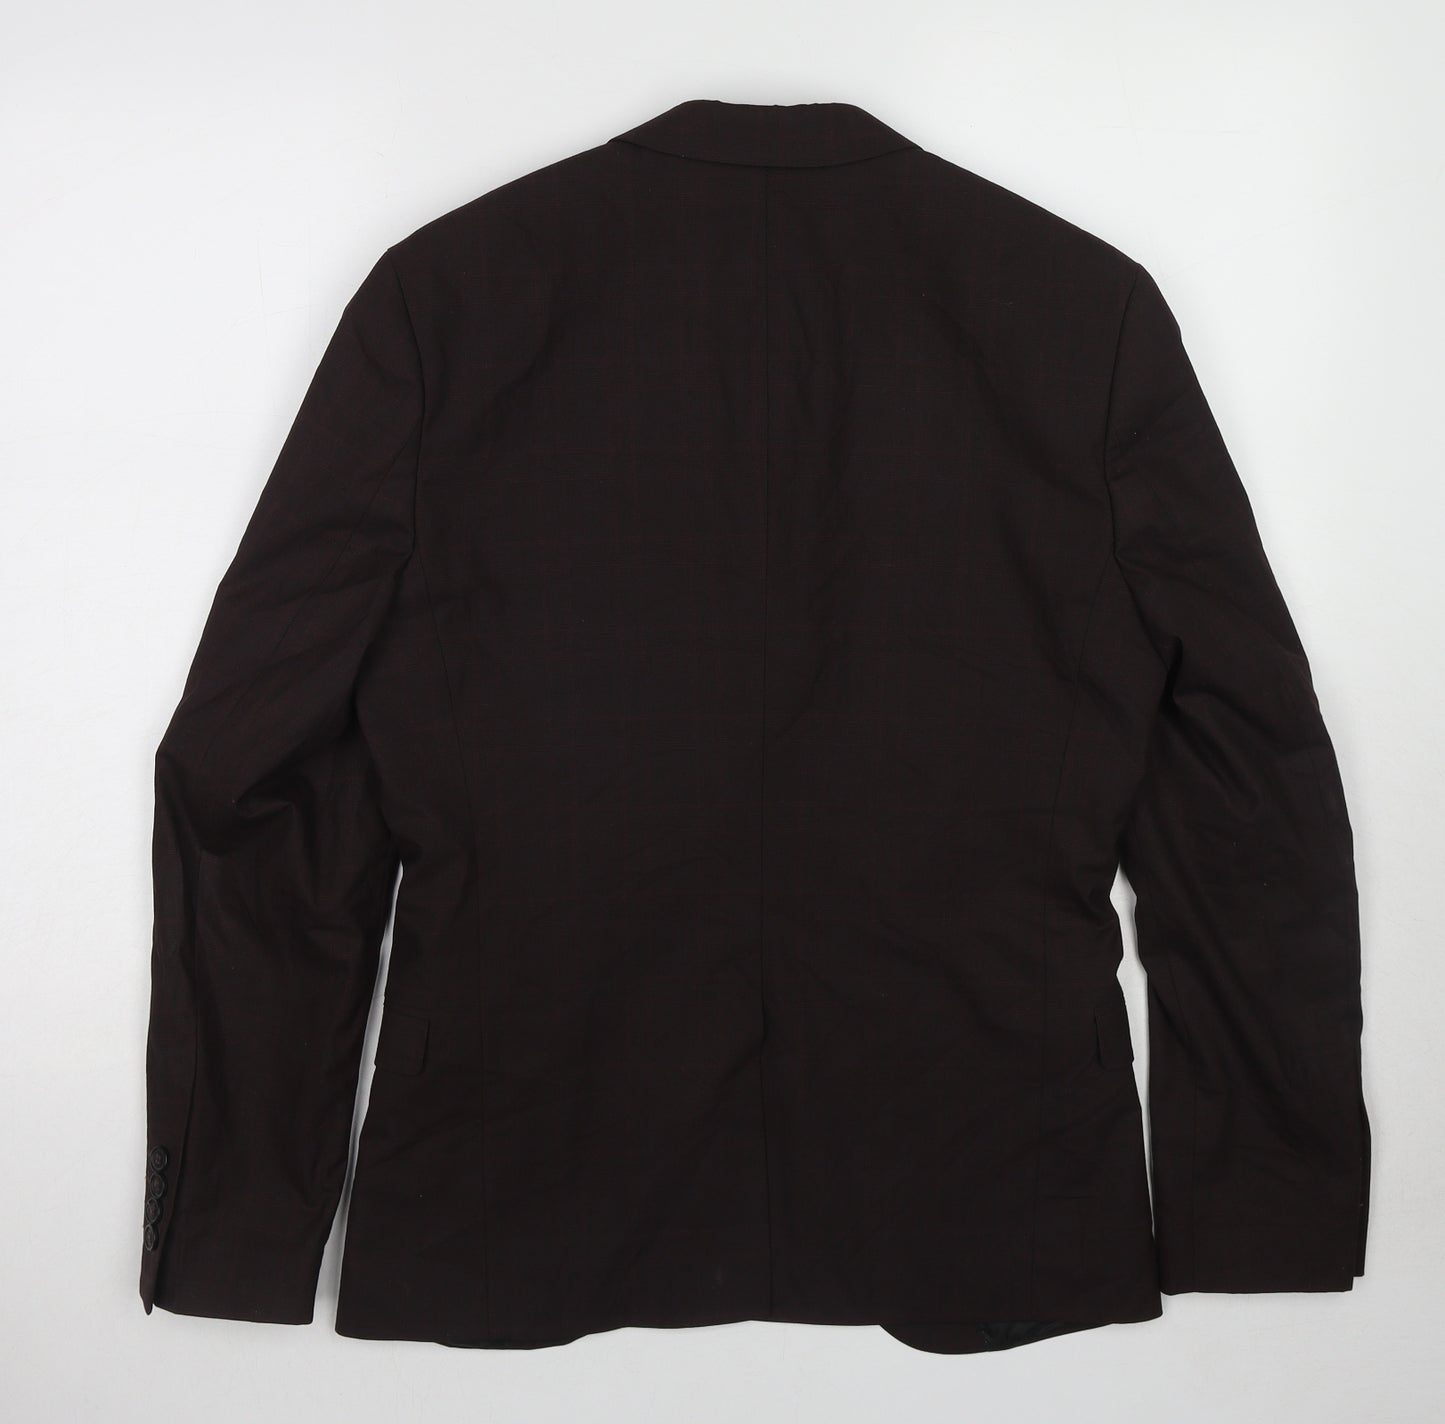 Selected Homme Mens Brown Polyester Jacket Suit Jacket Size 38 Regular